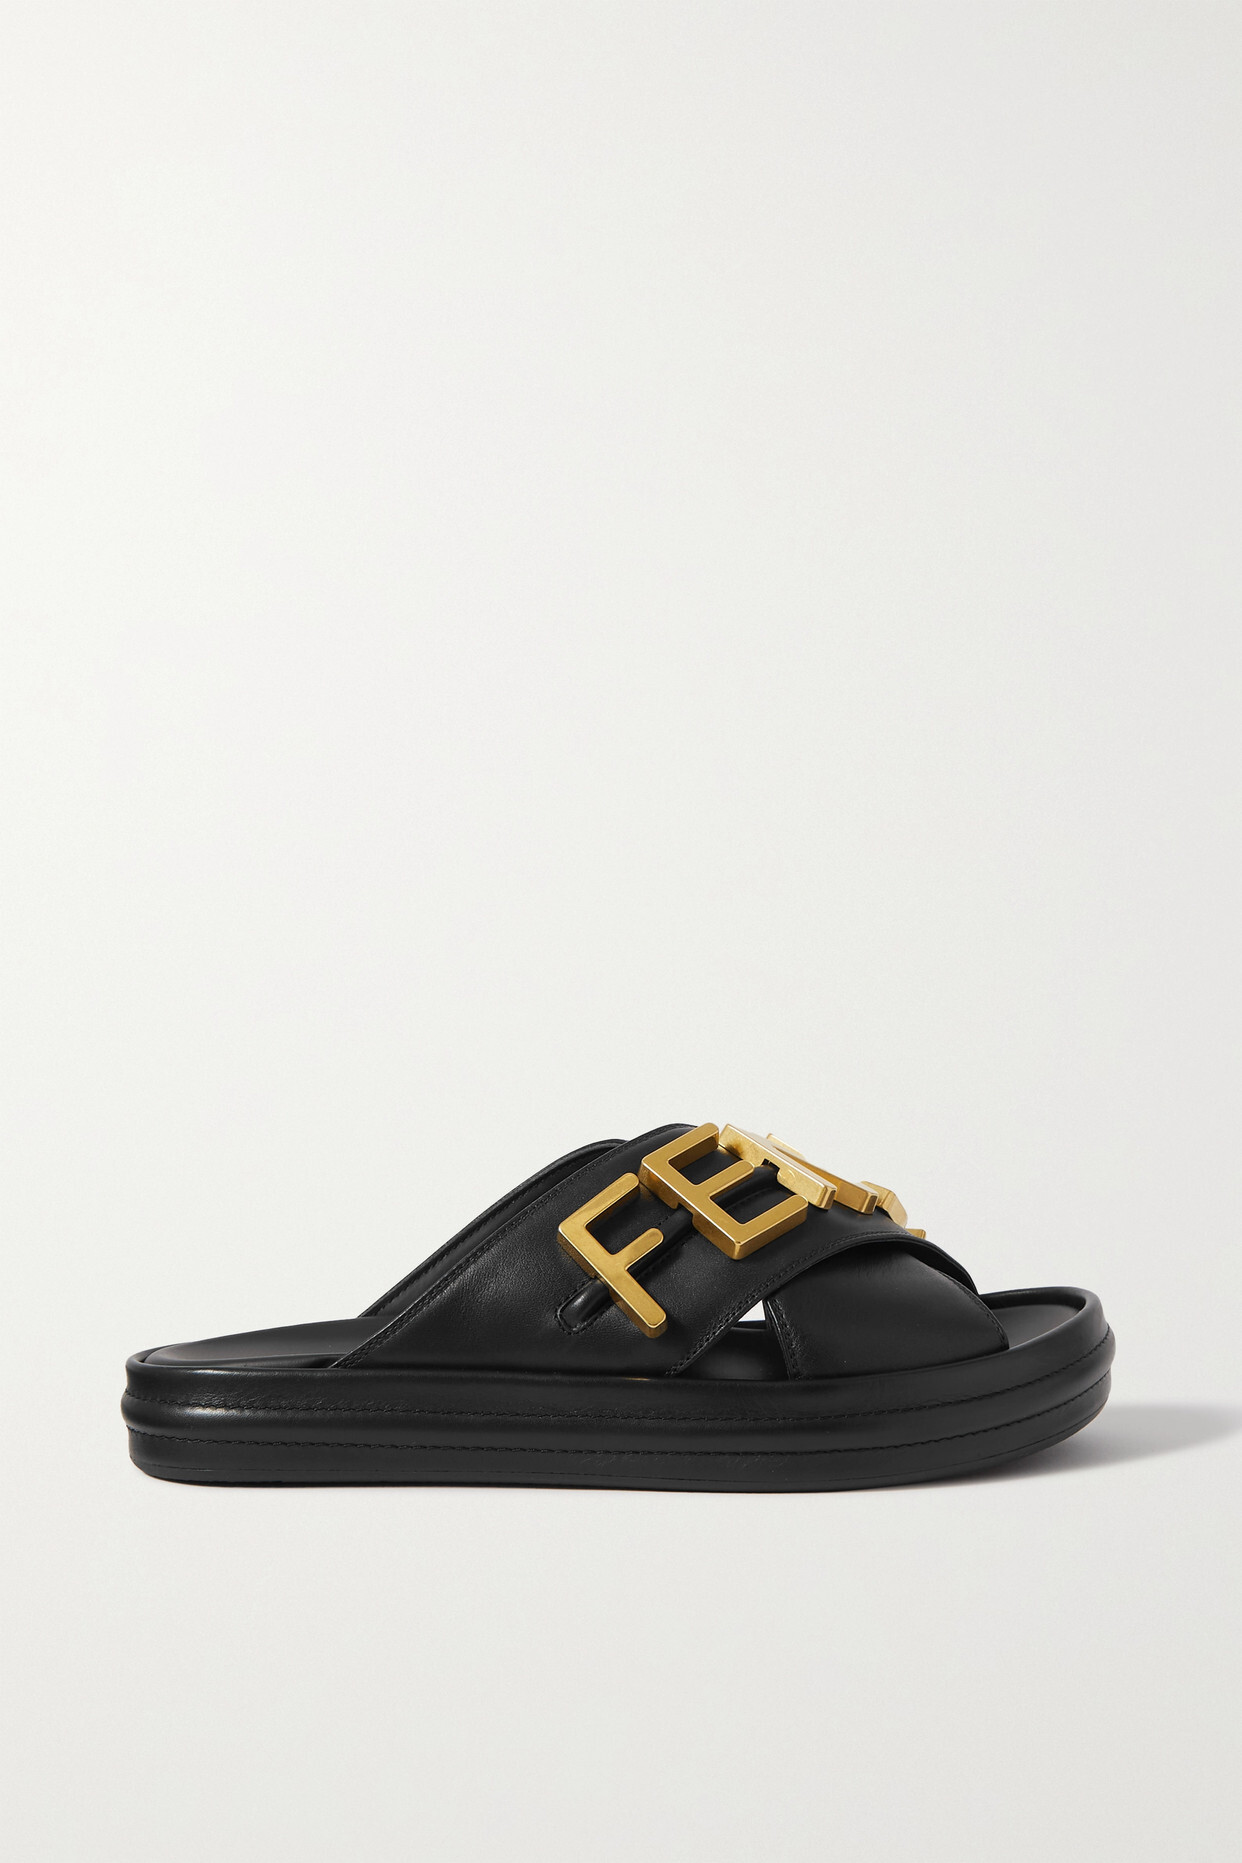 Fendi - Logo-embellished Leather Slides - Black